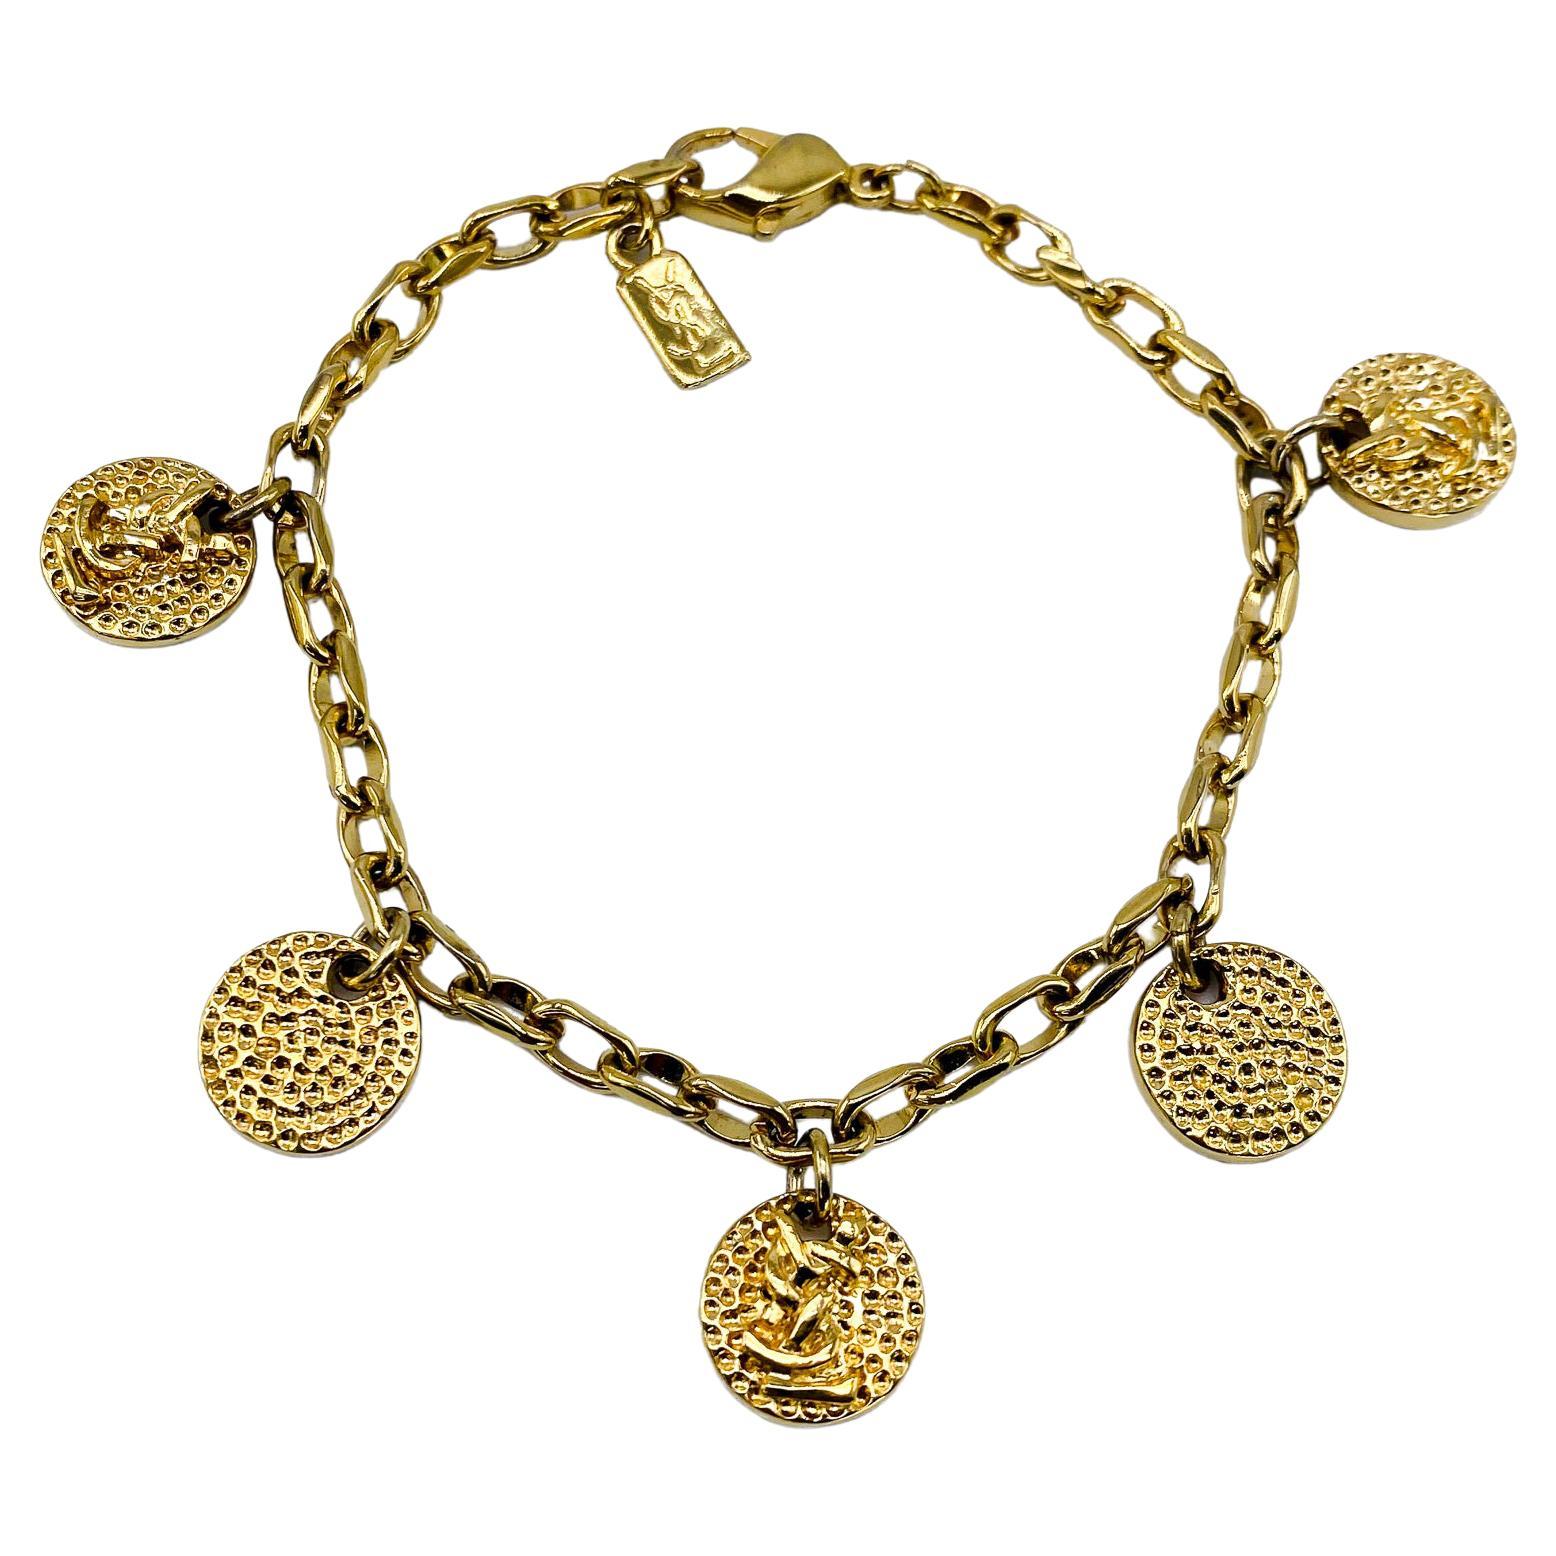 Vintage Yves Saint Laurent 1990s Gold Plated Charm Bracelet